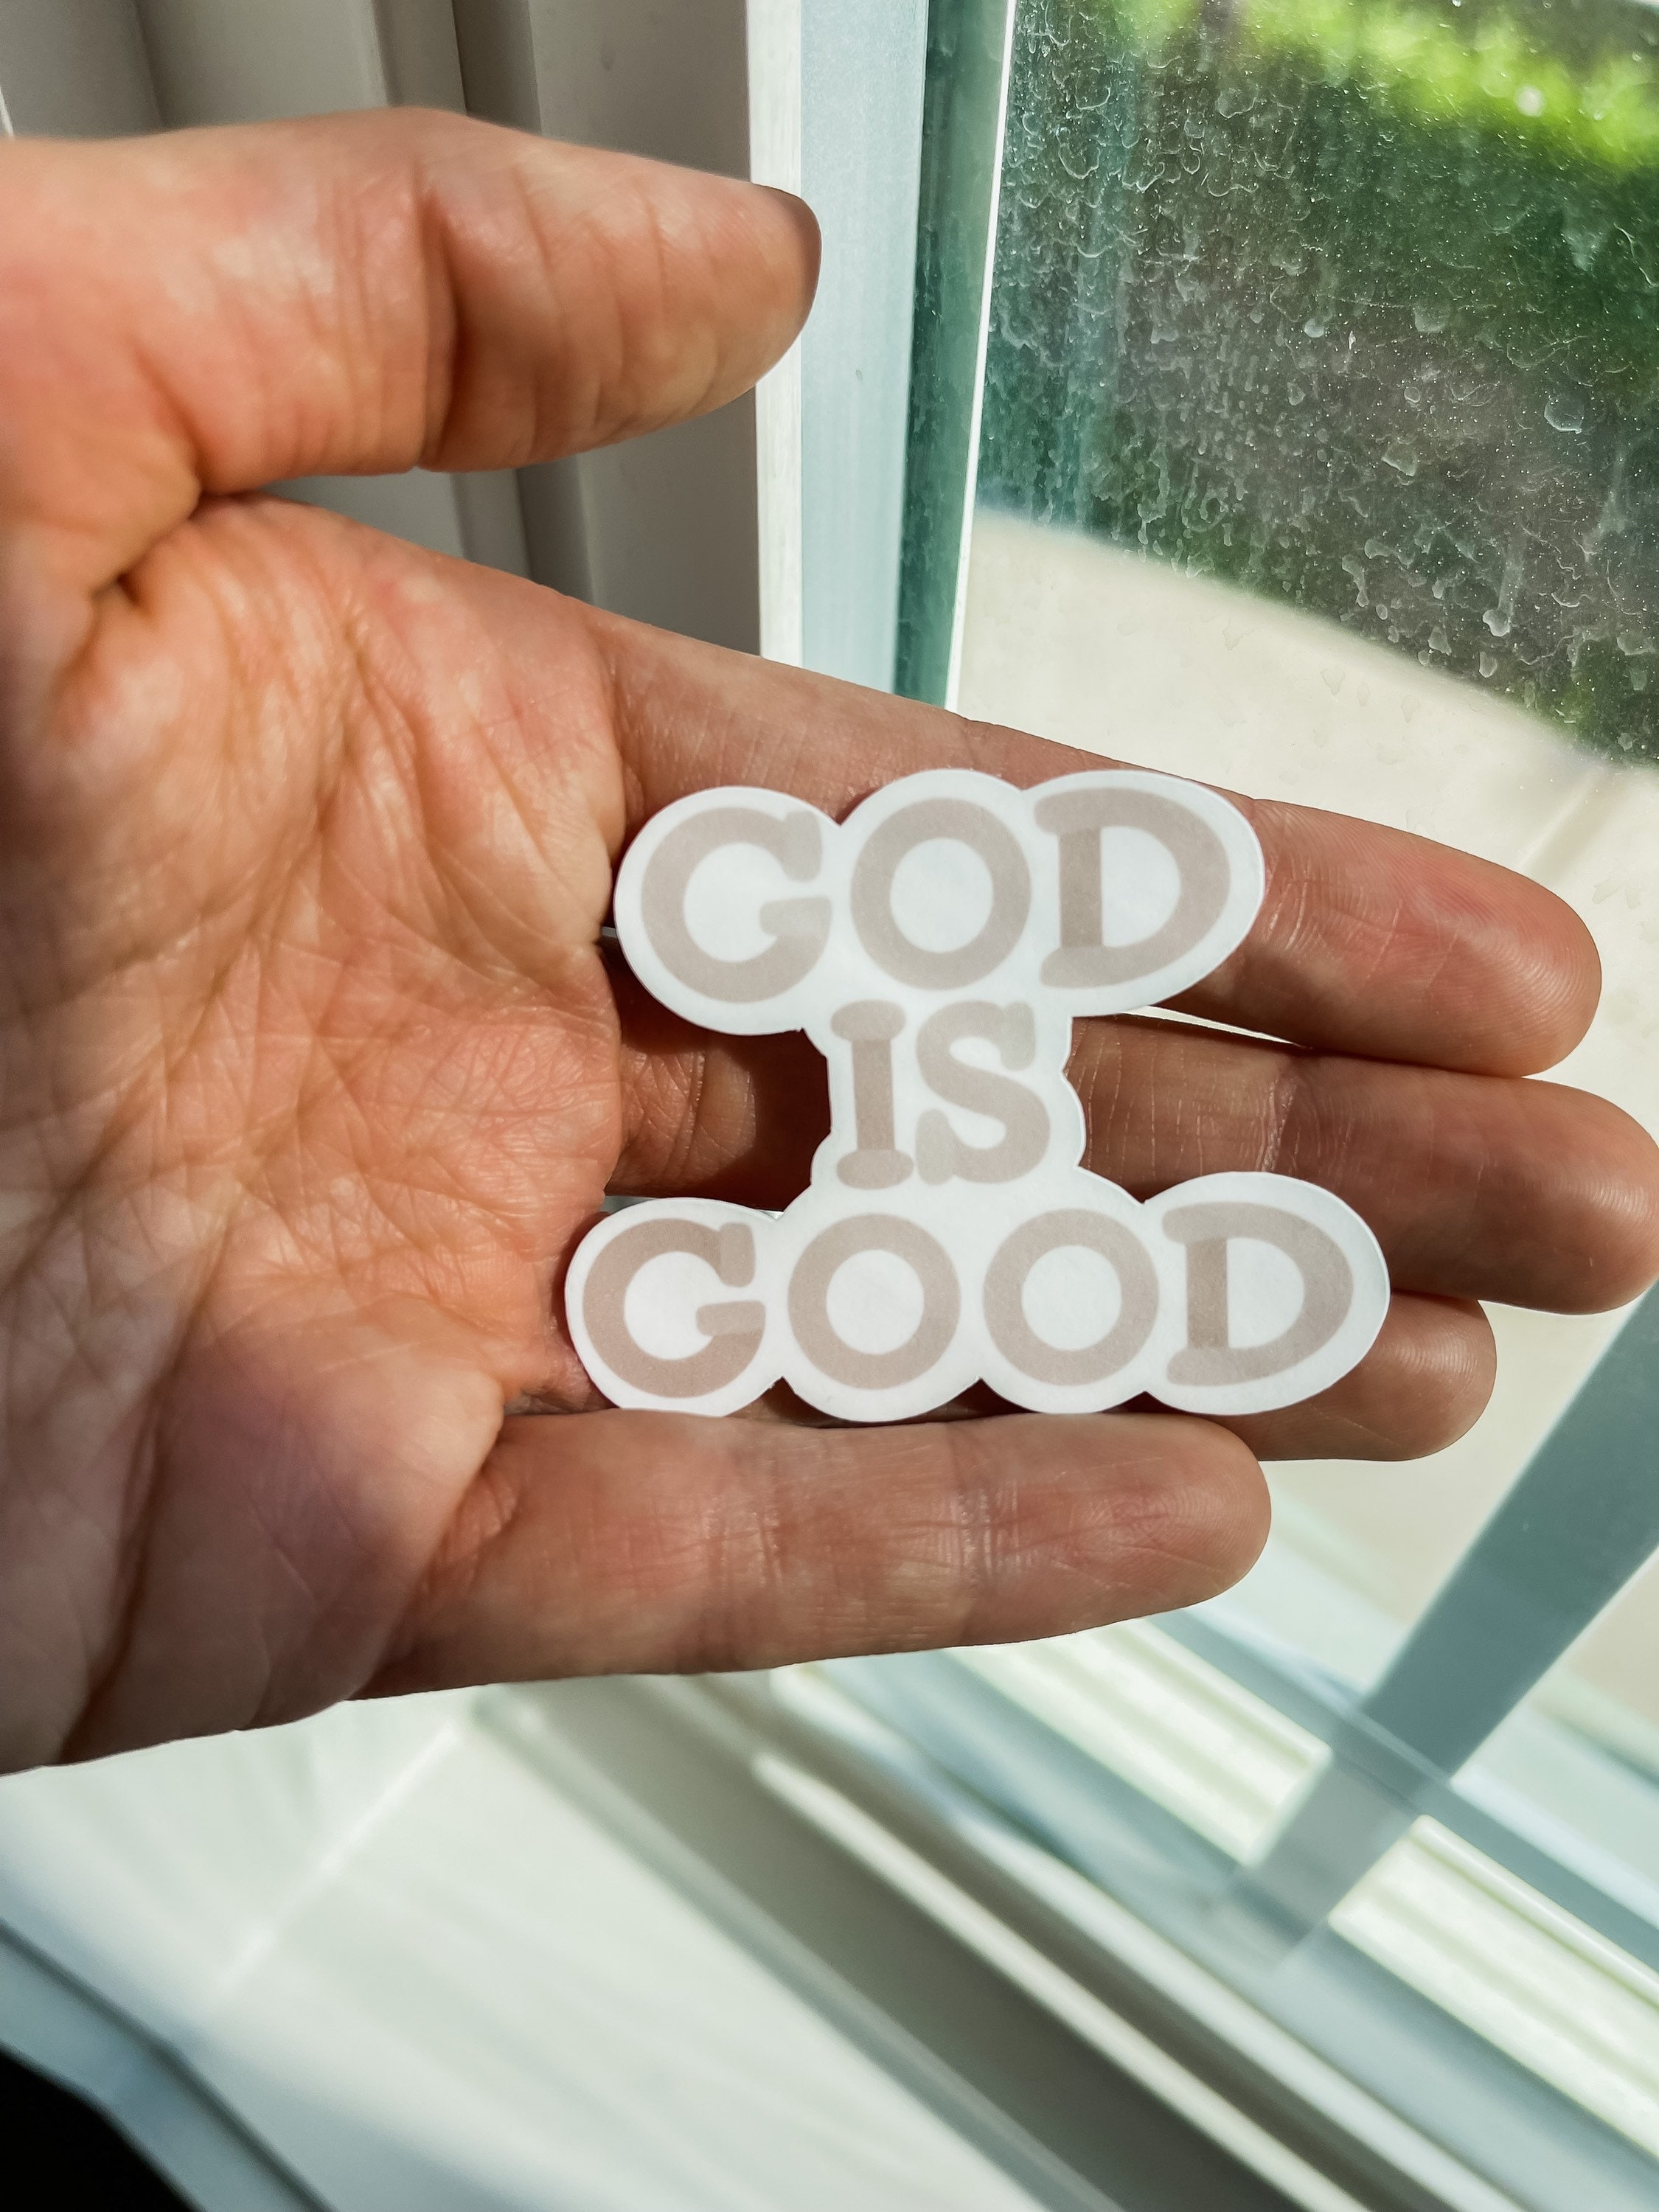 Christian Bible Verse Stickers - God is Good - PlanningFaithCo